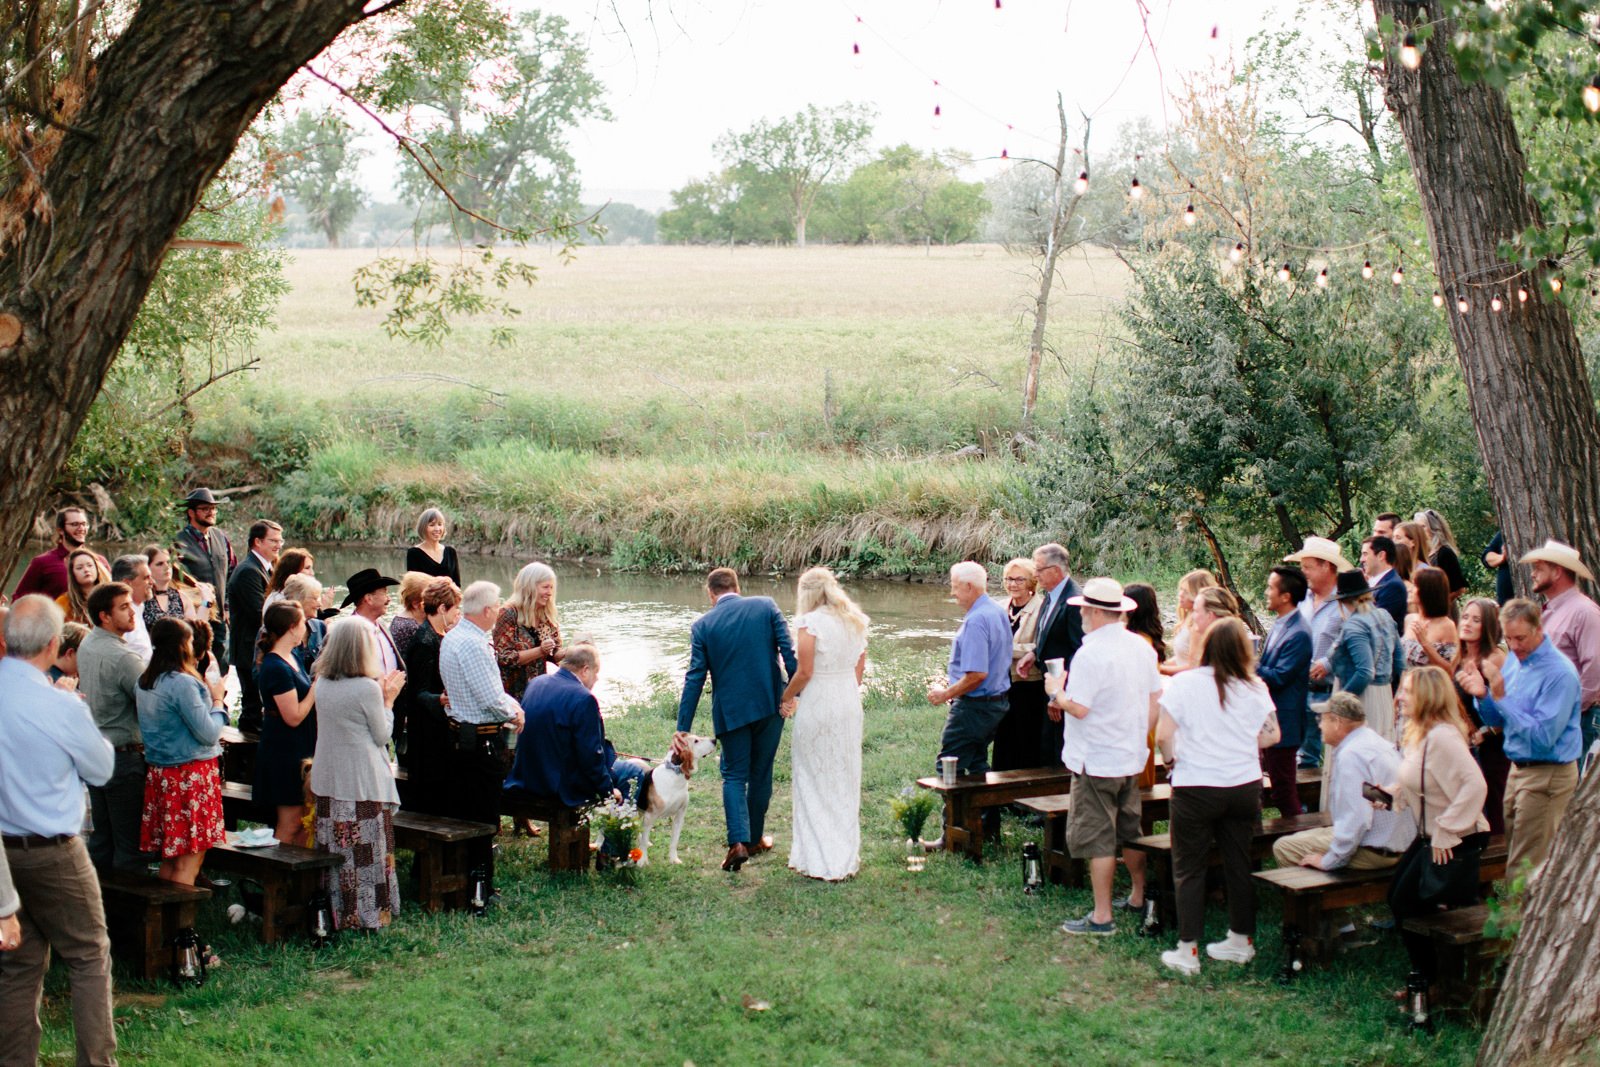 creekside-wedding-beer-tent-reception-sioux-falls-rapid-city-south-dakota-photographer-michael-liedtke045.jpg